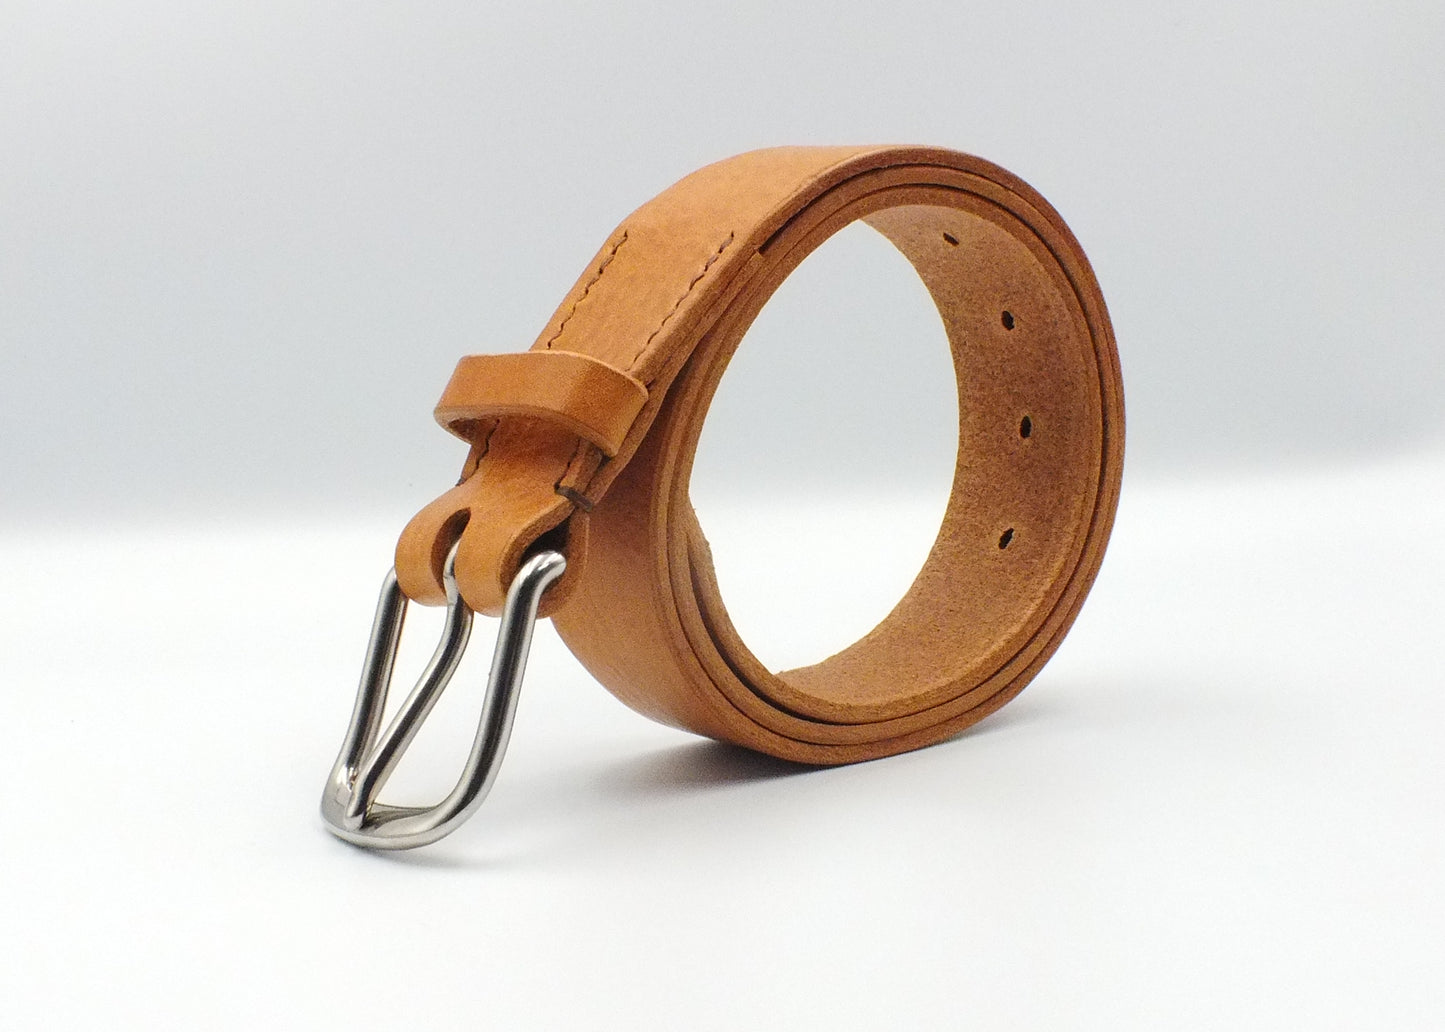 SALE - Tan Leather Belt - 1.5" (38mm wide) - 32" to 36" Waist